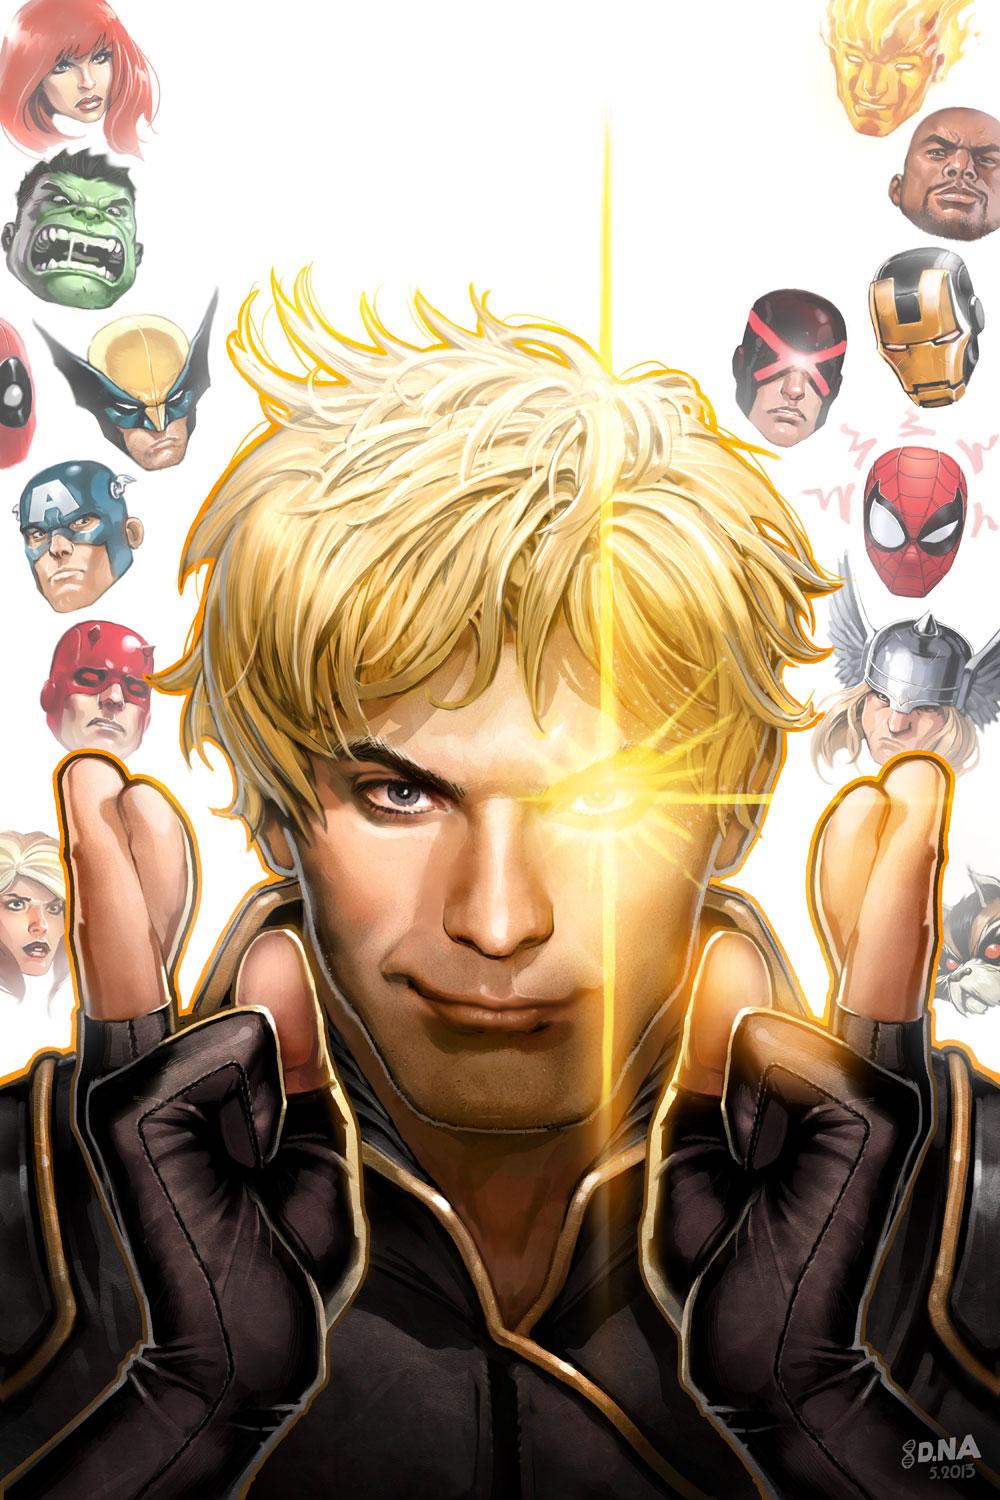 Longshot Saves the Marvel Universe issue #1 Review (SPOILER ALERT)